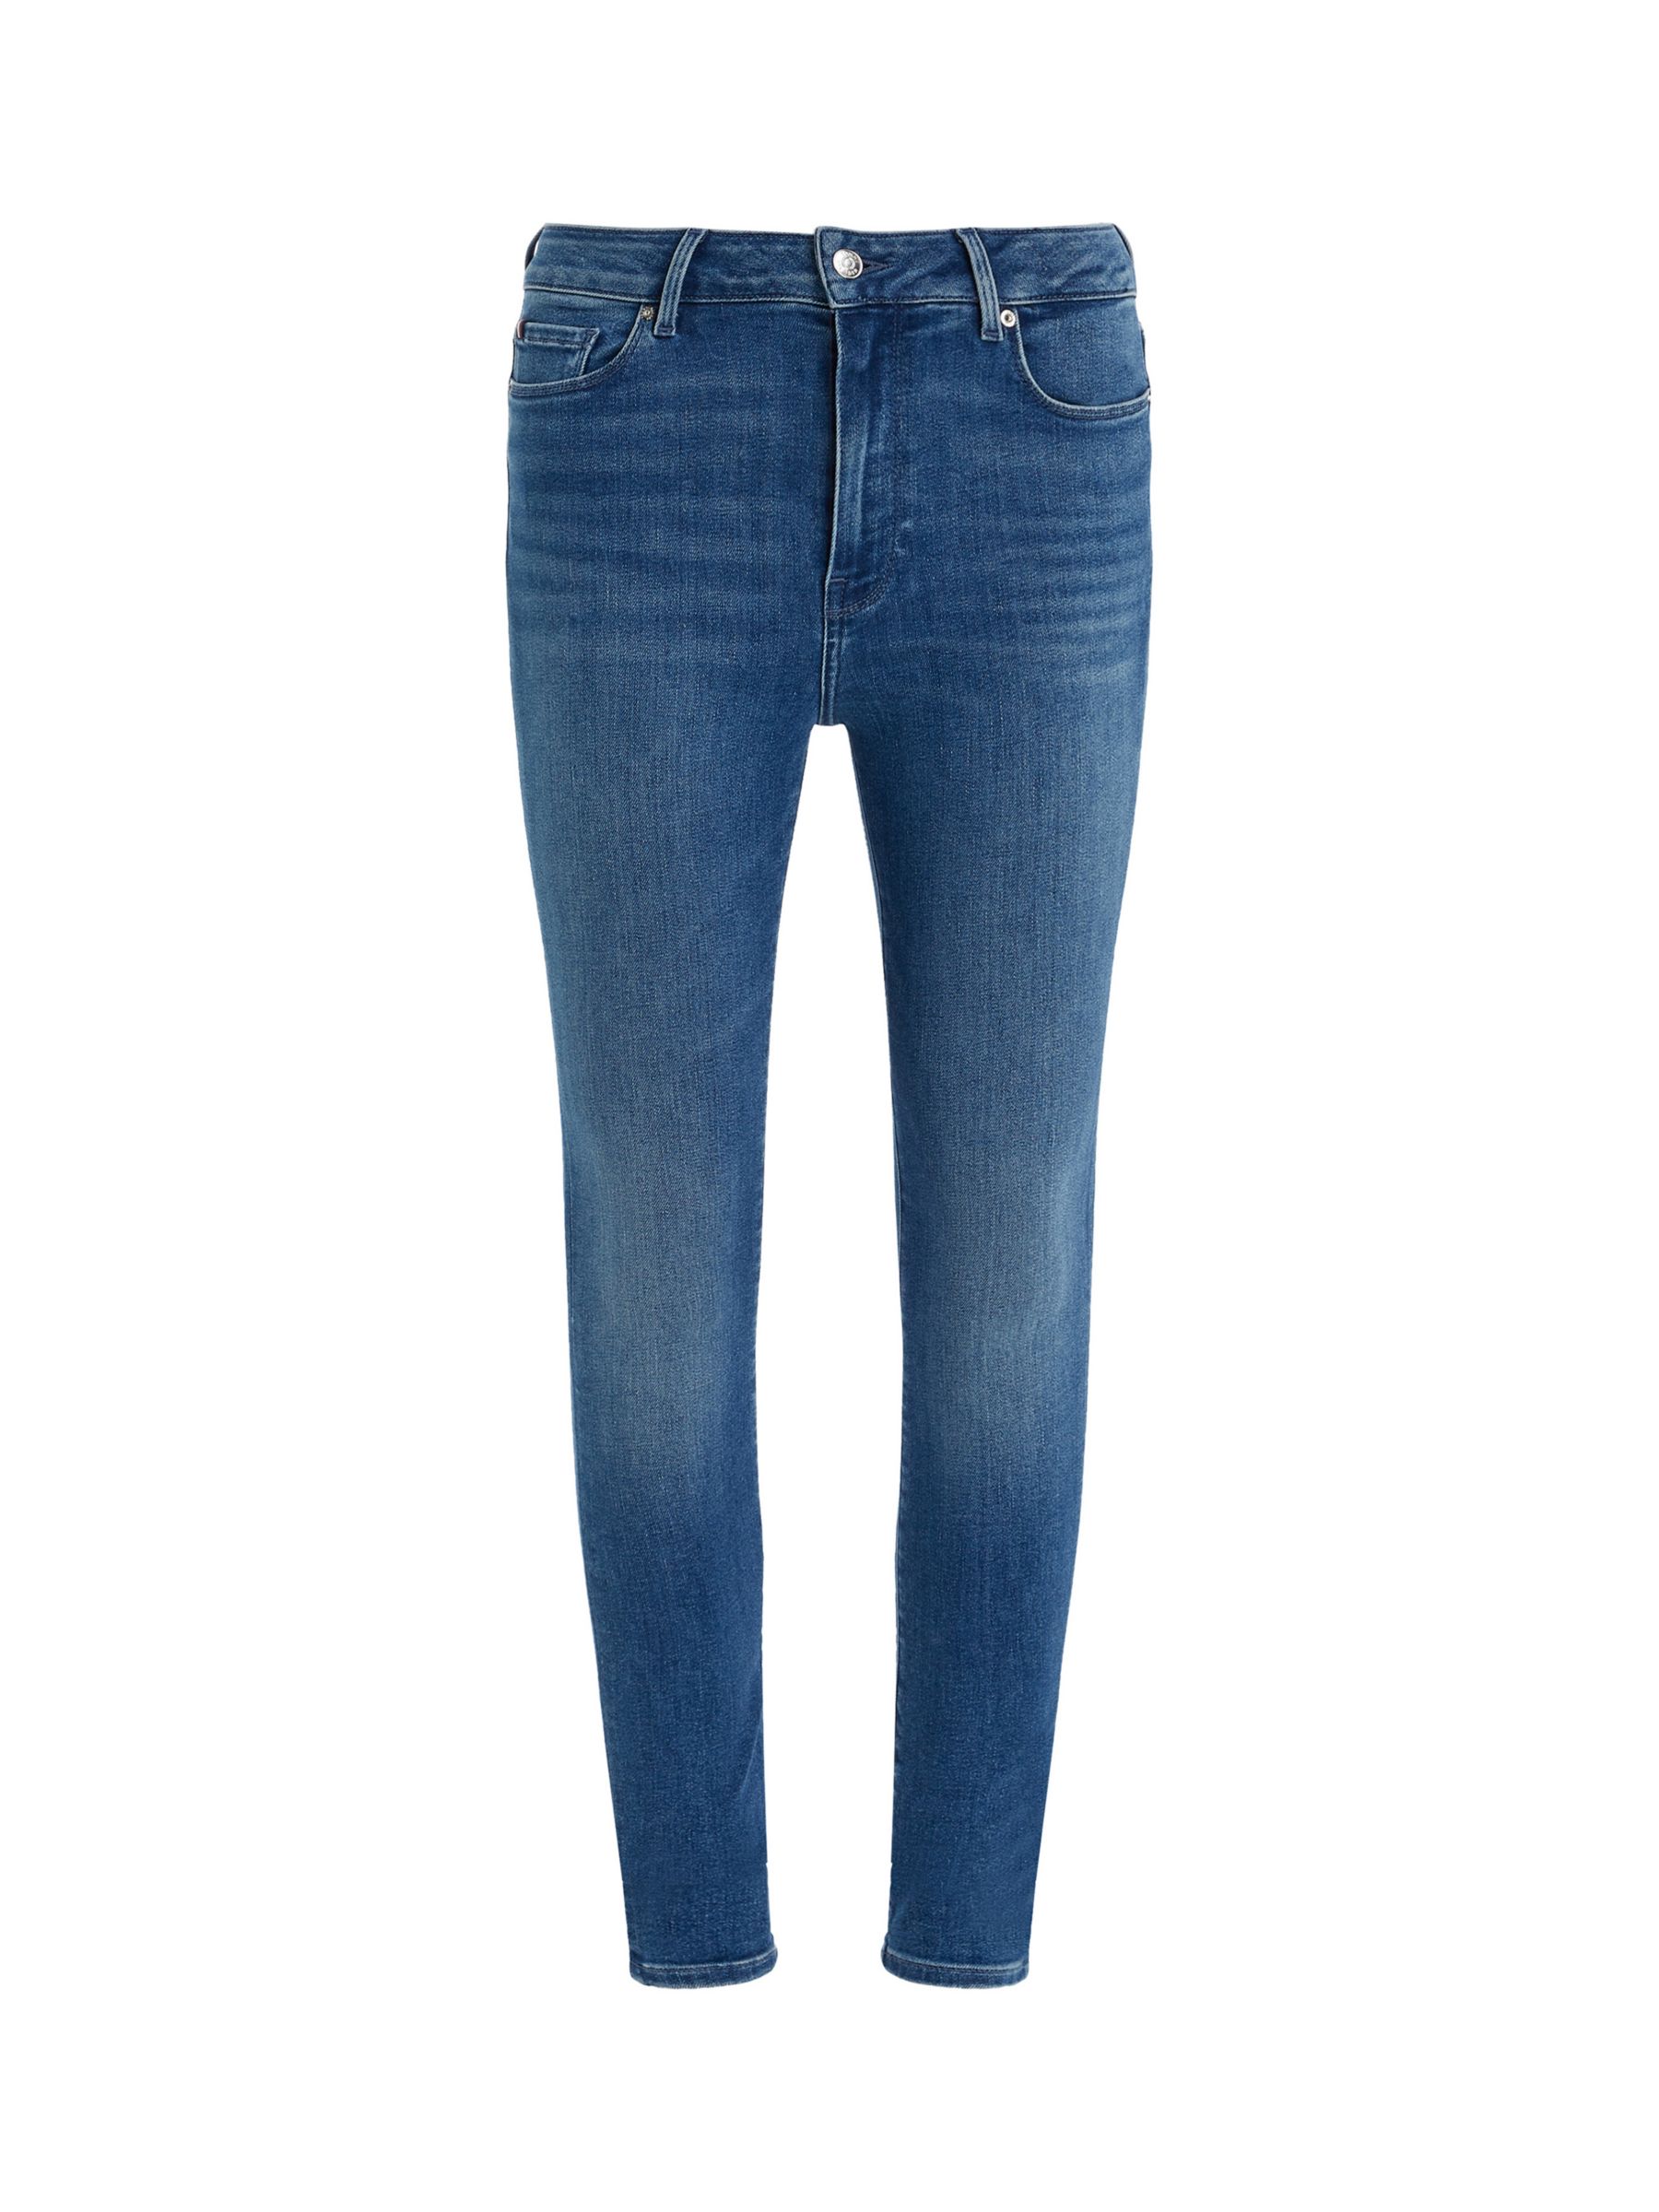 Tommy Hilfiger Skinny Jeans, Blue at John Lewis & Partners